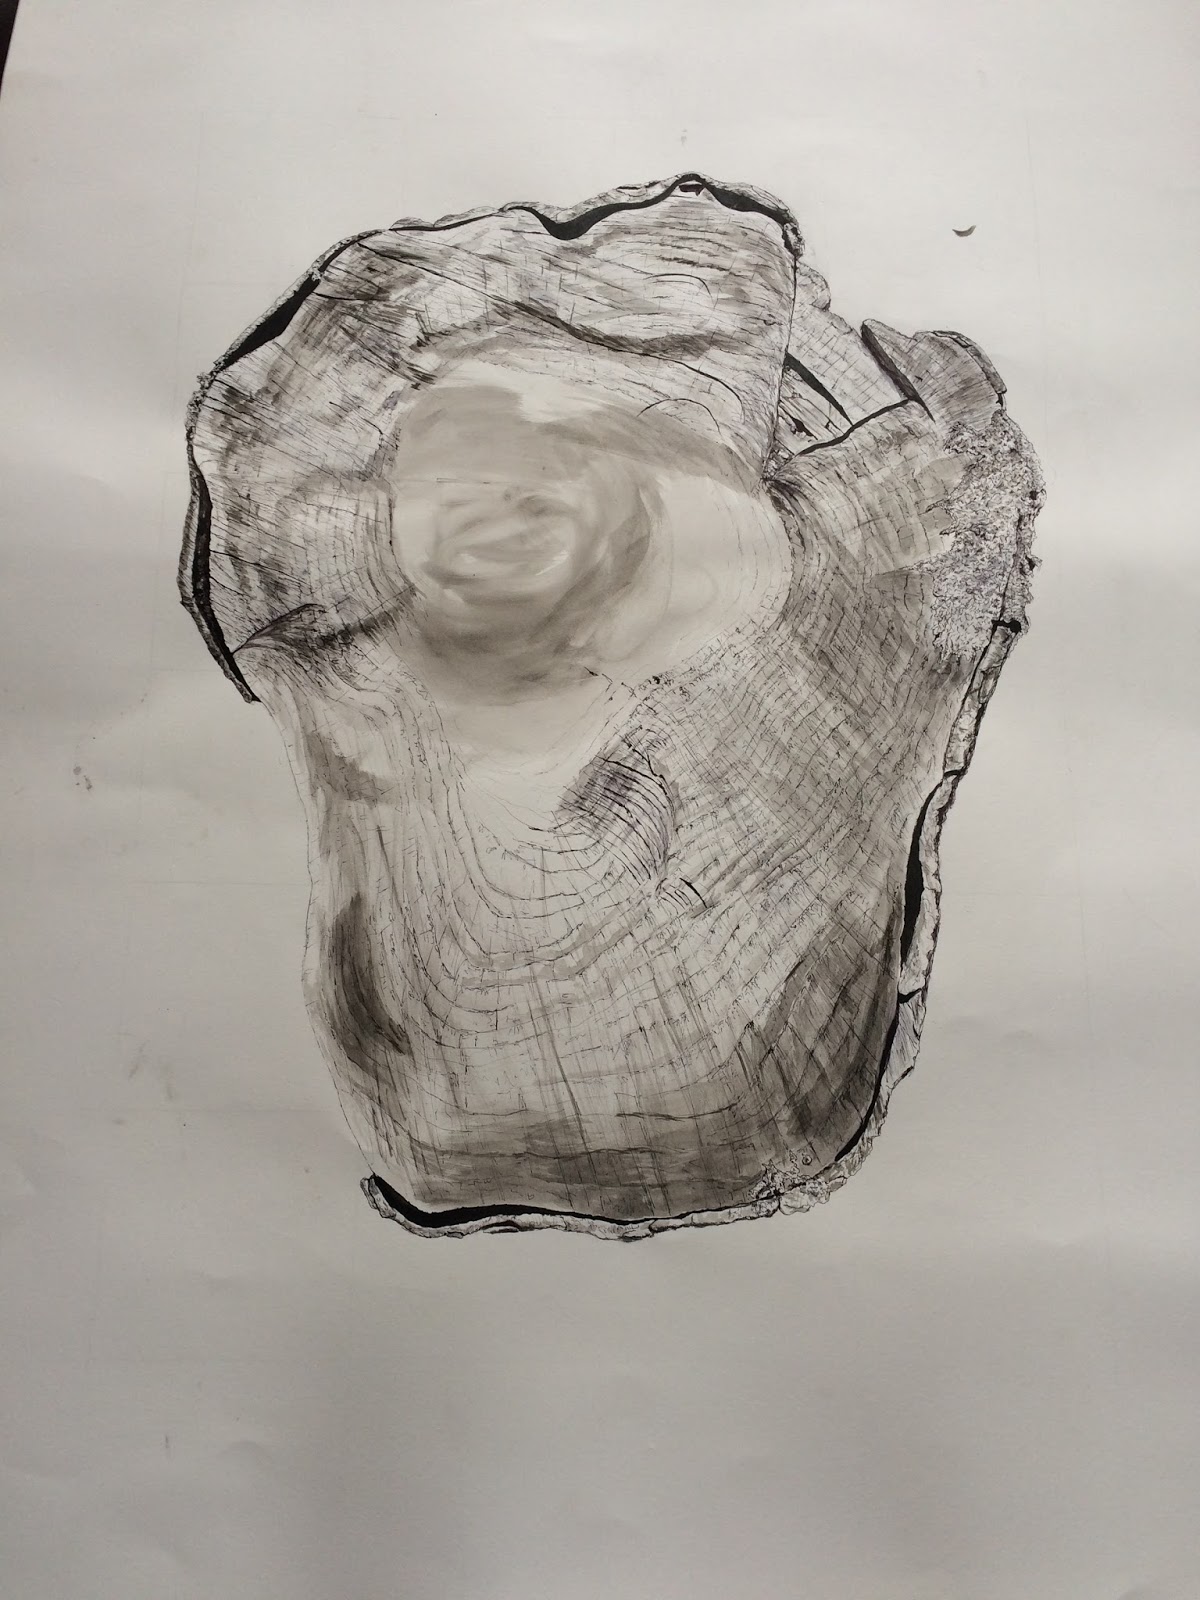 Art Project || Drawing a Tree Stump